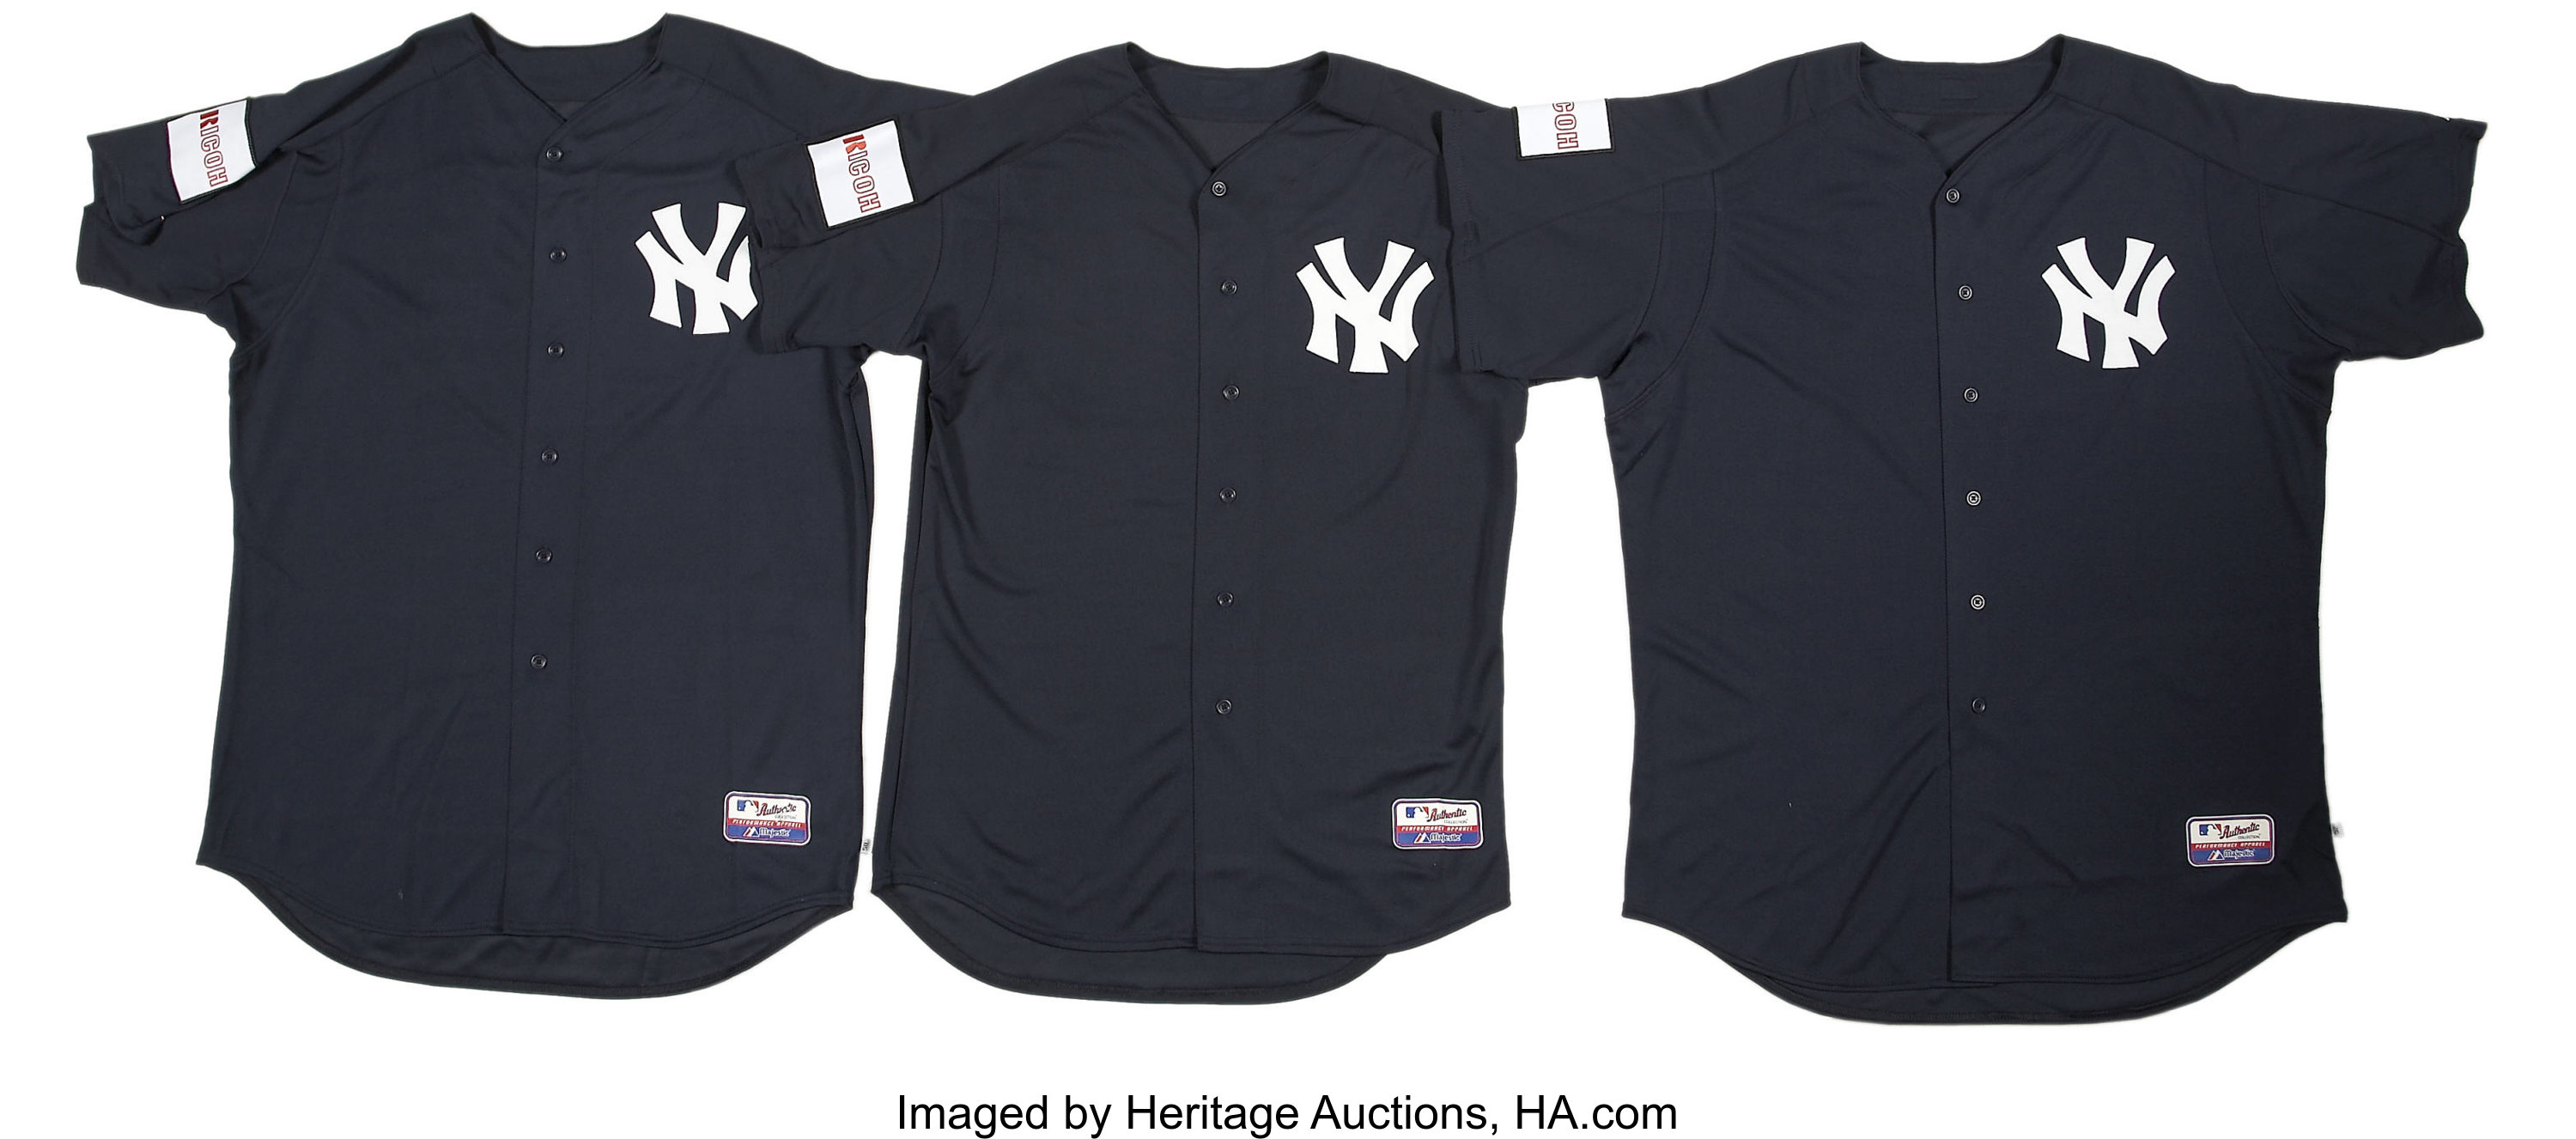 2004 New York Yankees Batting Practice Jerseys From Japanese, Lot #65150